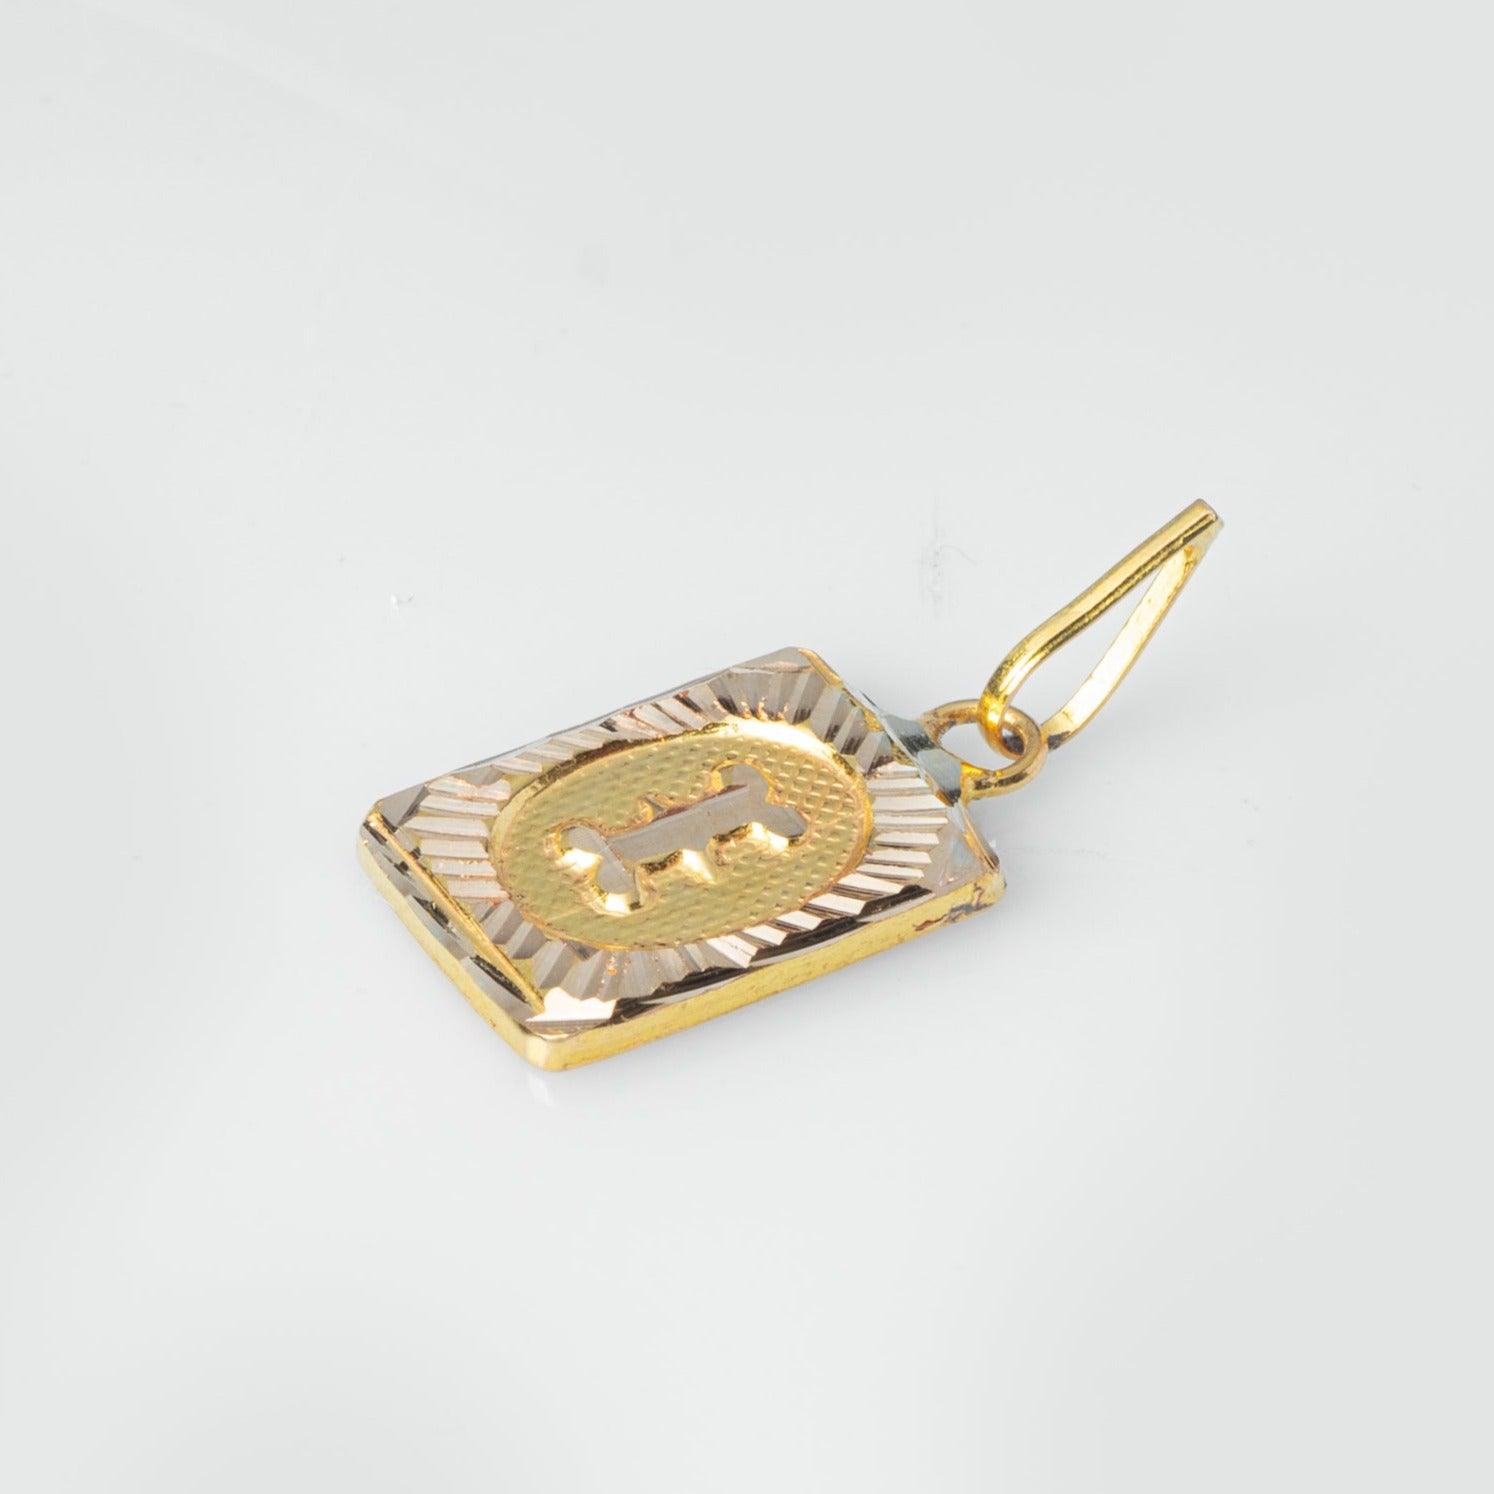 'I' 22ct Gold Initial Pendant P-7495-I - Minar Jewellers